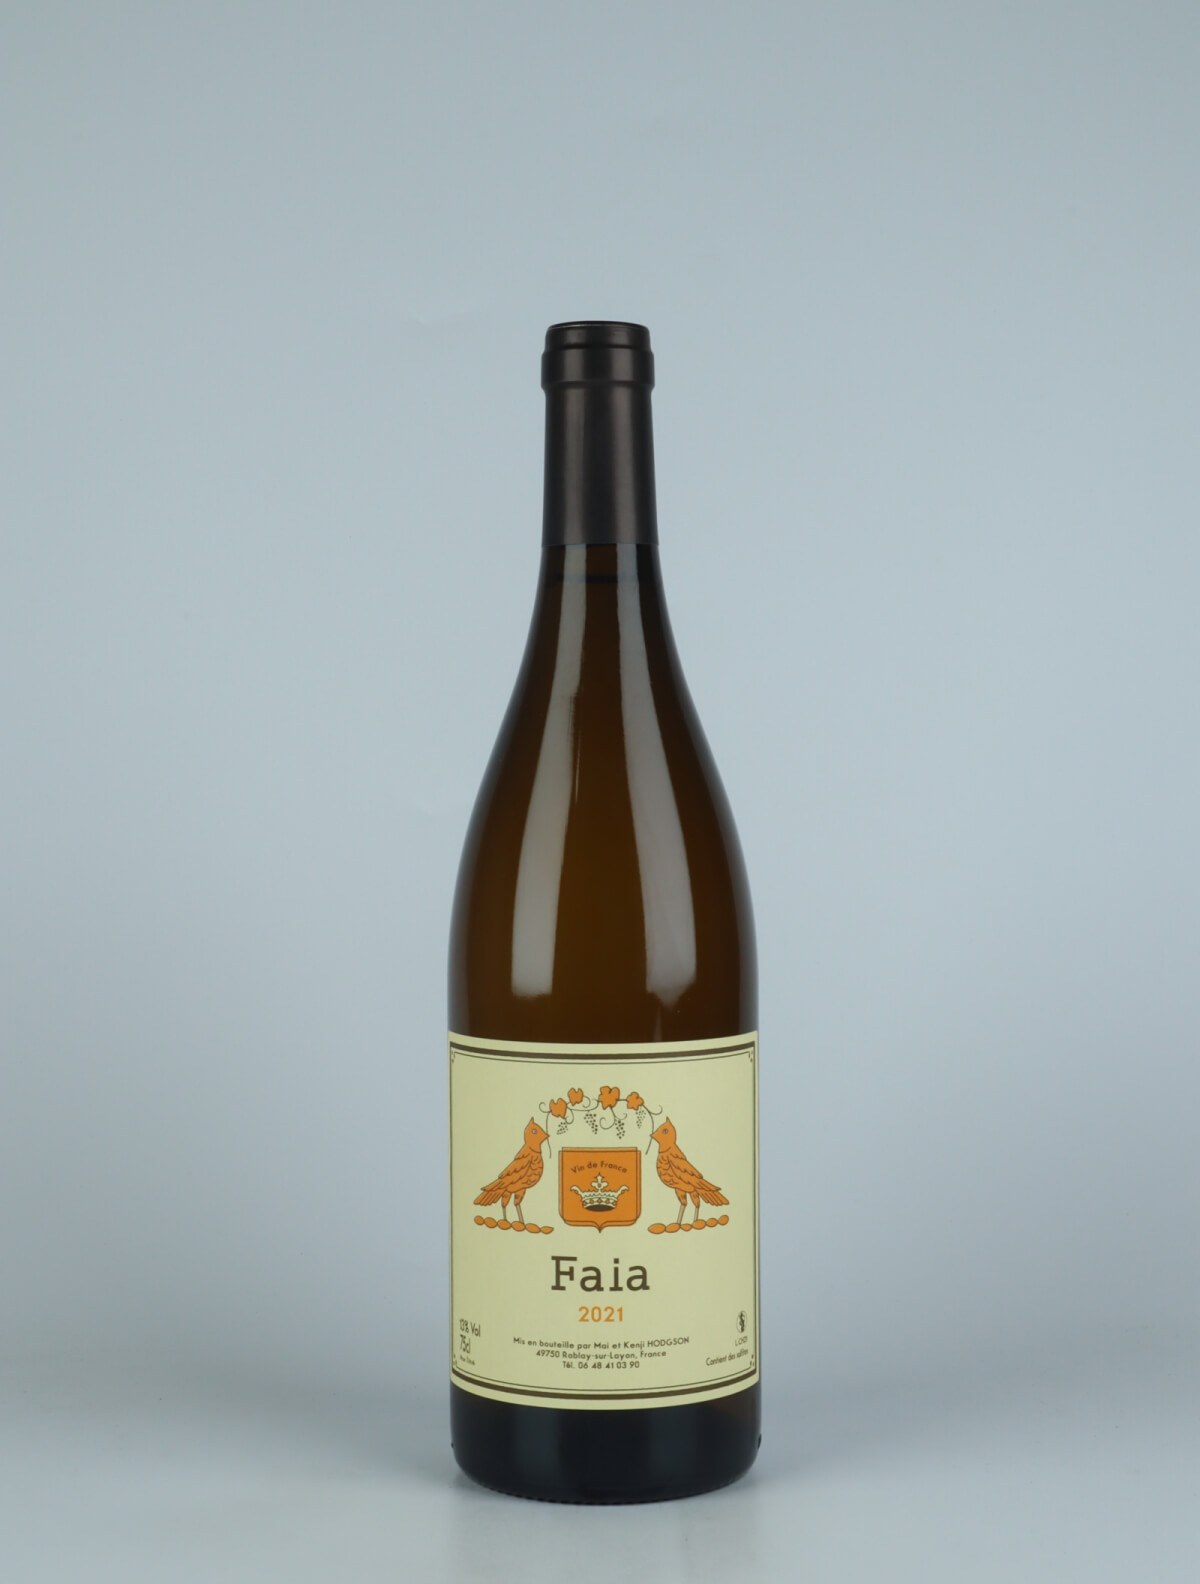 A bottle 2021 Faia White wine from Mai et Kenji Hodgson, Loire in France